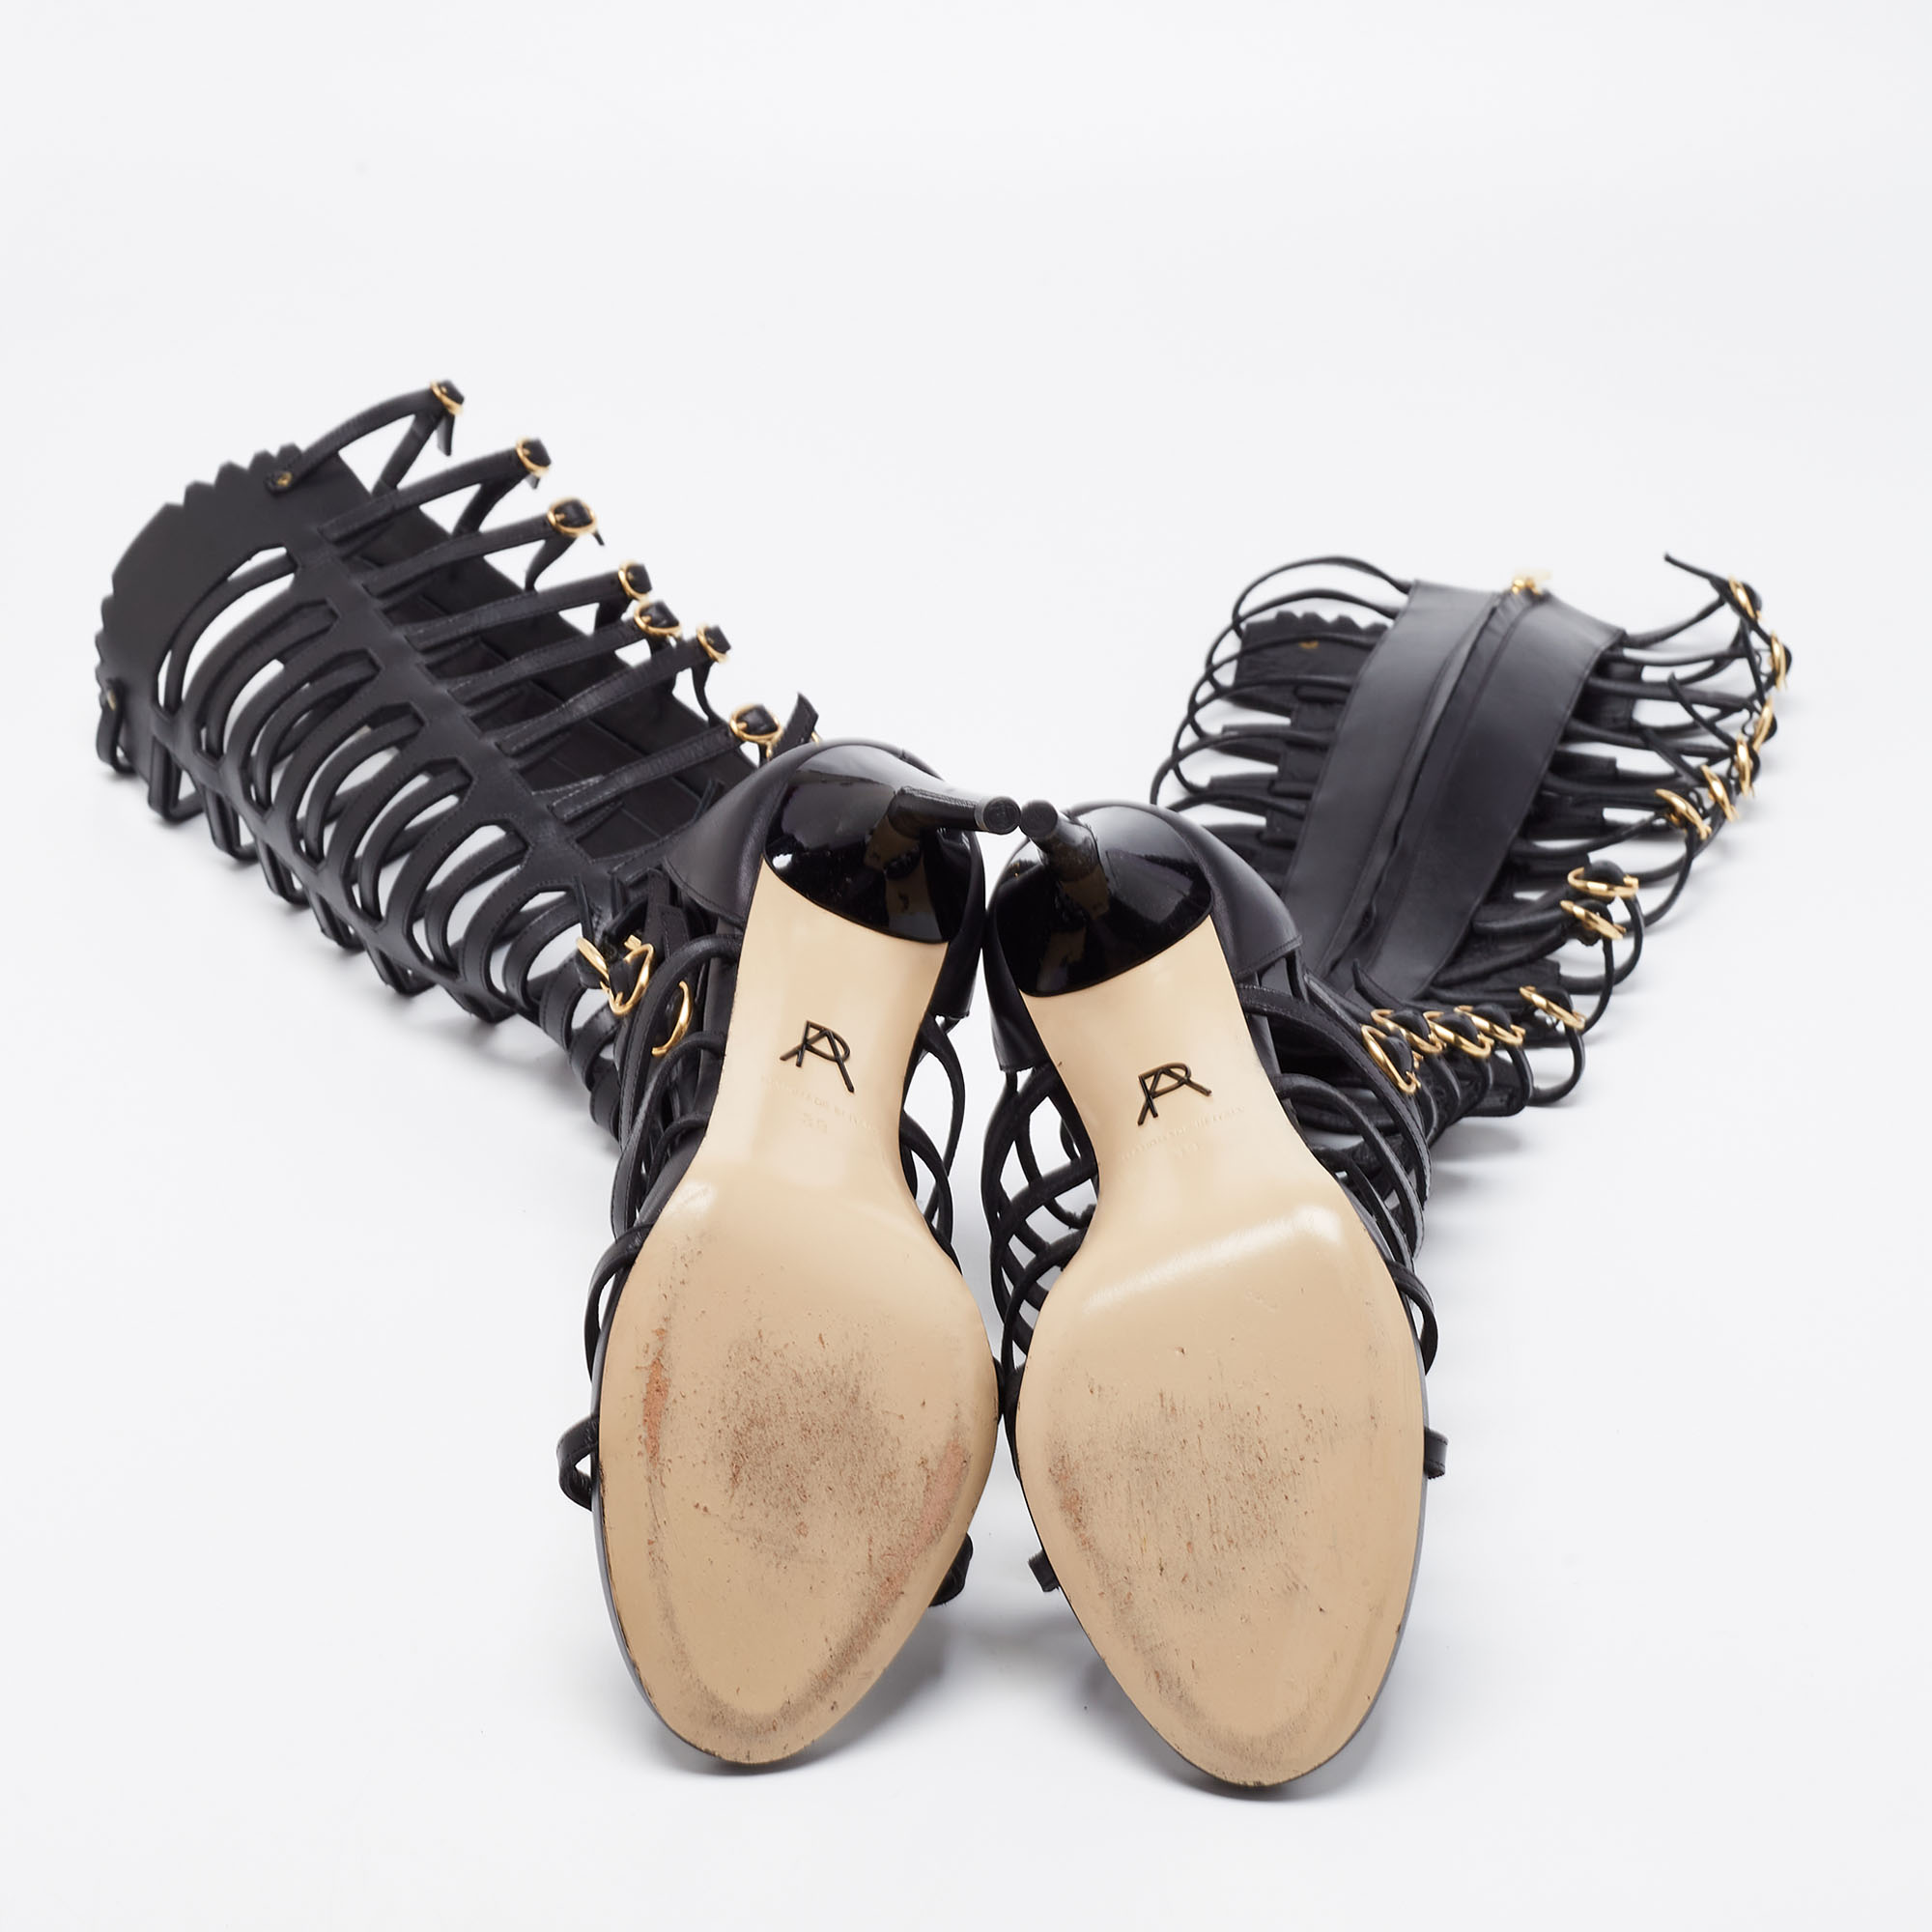 Paul Andrew Black Leather Athena Gladiator Sandals Size 39